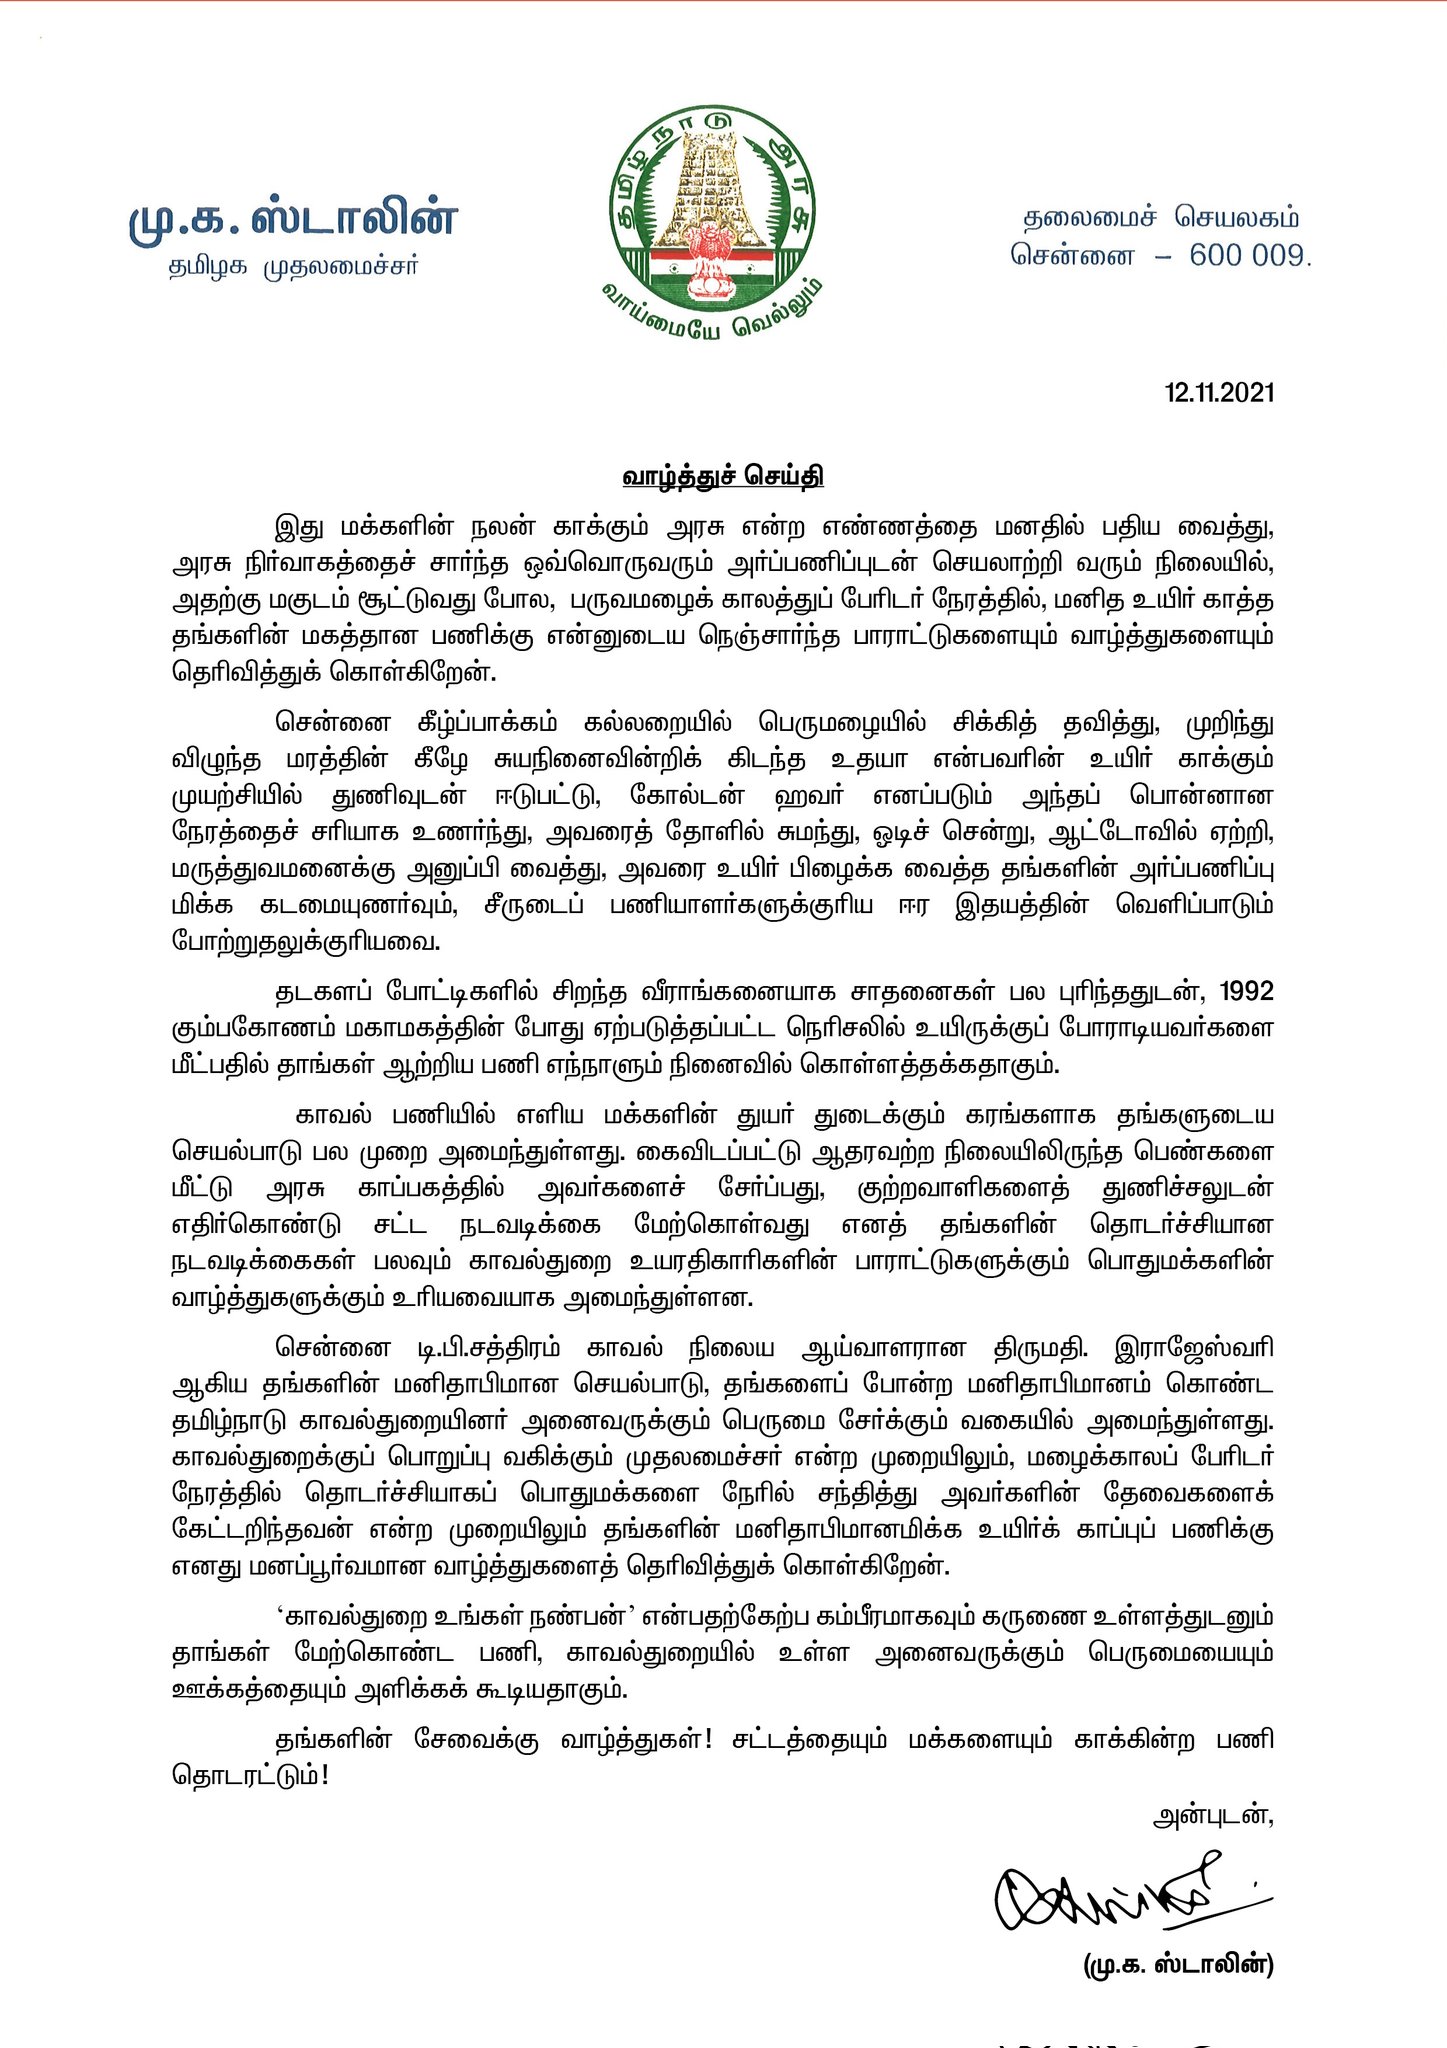 Tamil Nadu CM MK Stalin Rewards Inspector Rajeshwari, Calls Her 'Source Of Pride